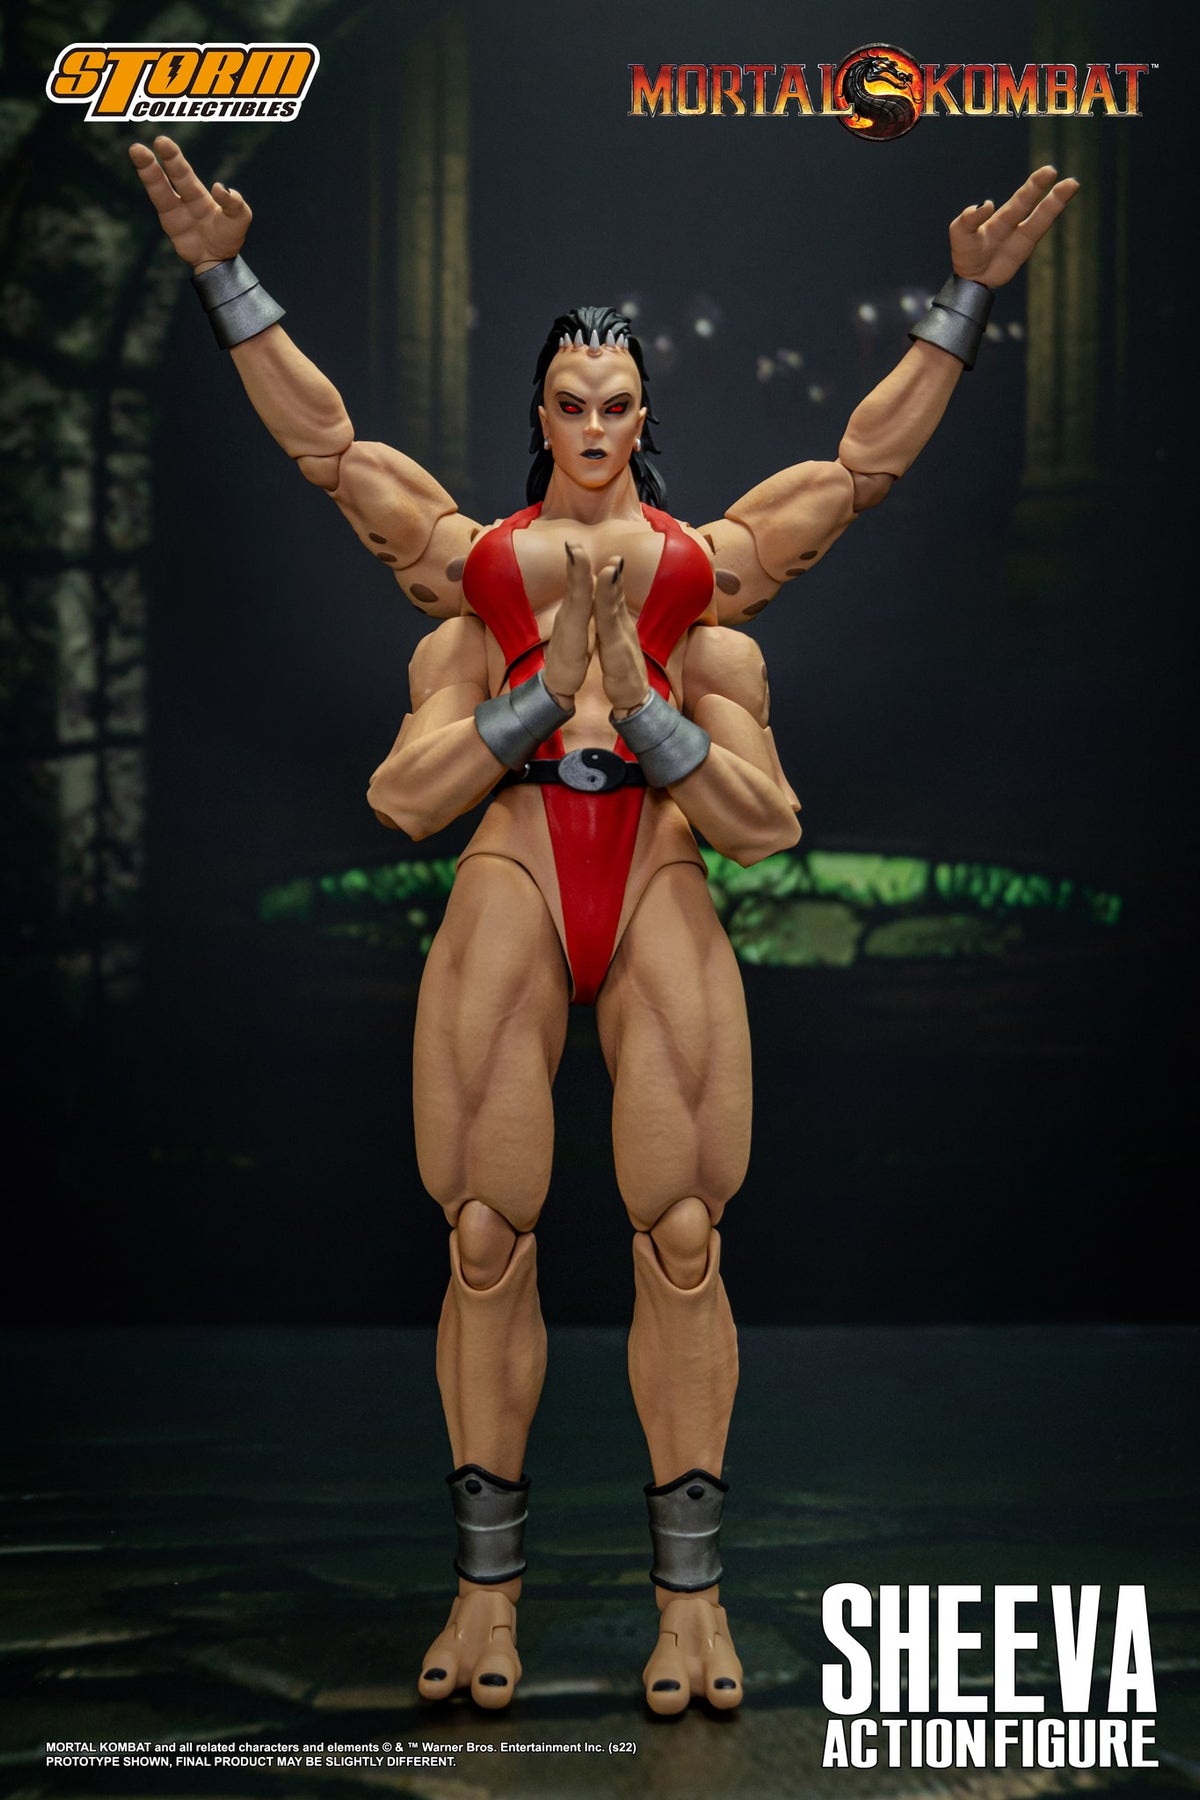 Mortal Kombat SHAO KAHN 1/12 Scale Collectible Figure